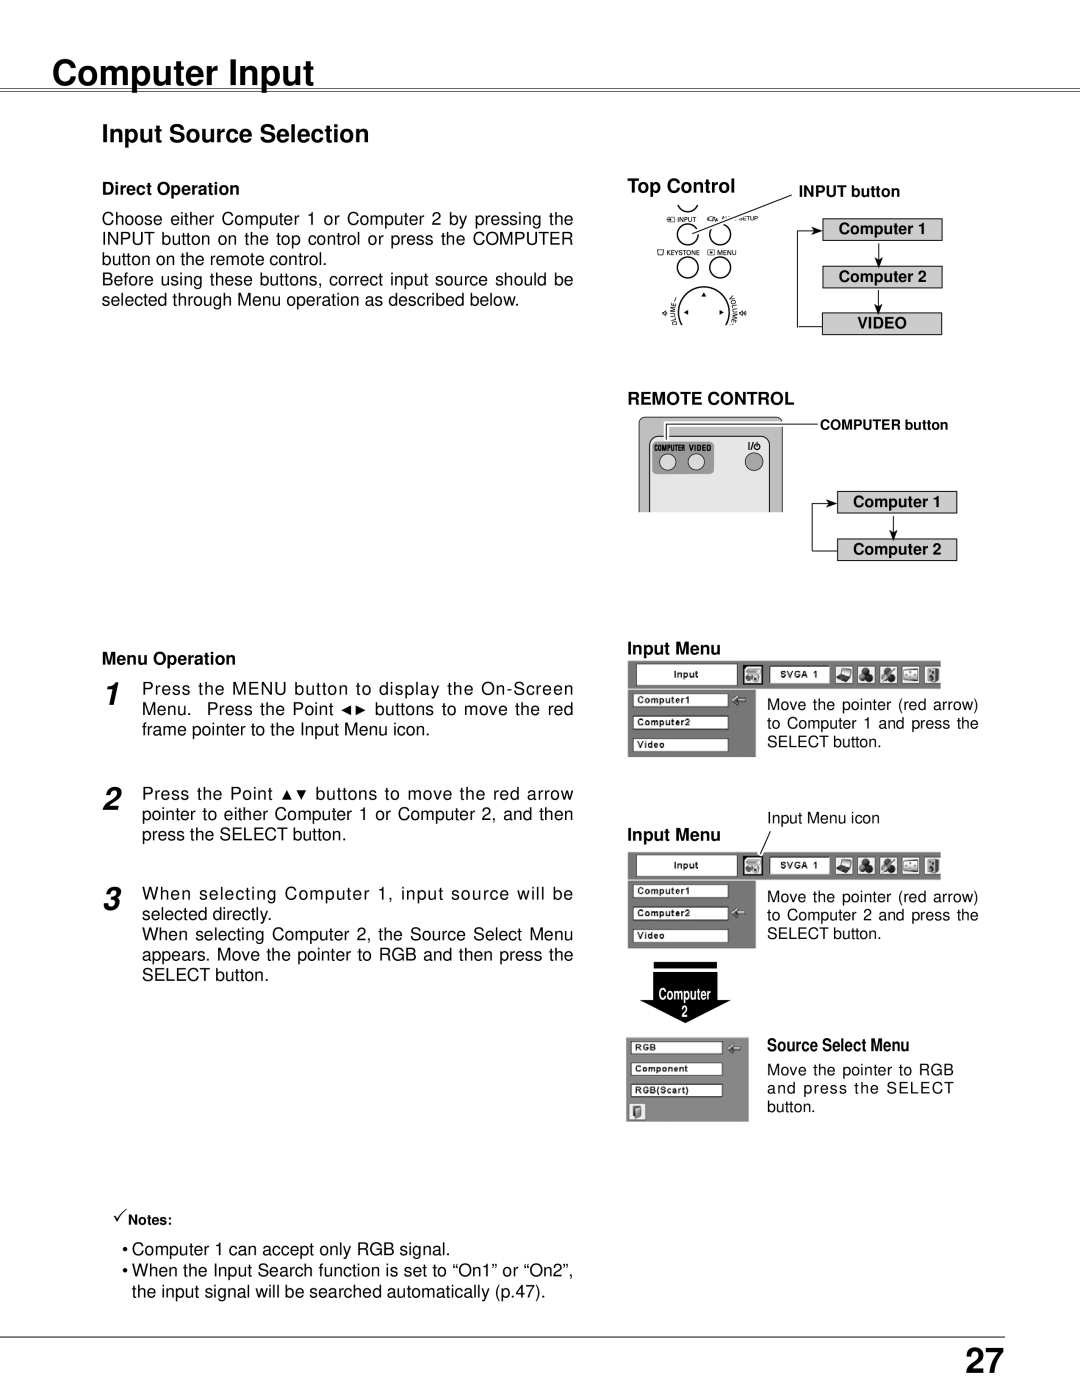 Eiki LC-XB42 Computer Input, Input Source Selection, Direct Operation, Remote Control, Menu Operation, Source Select Menu 